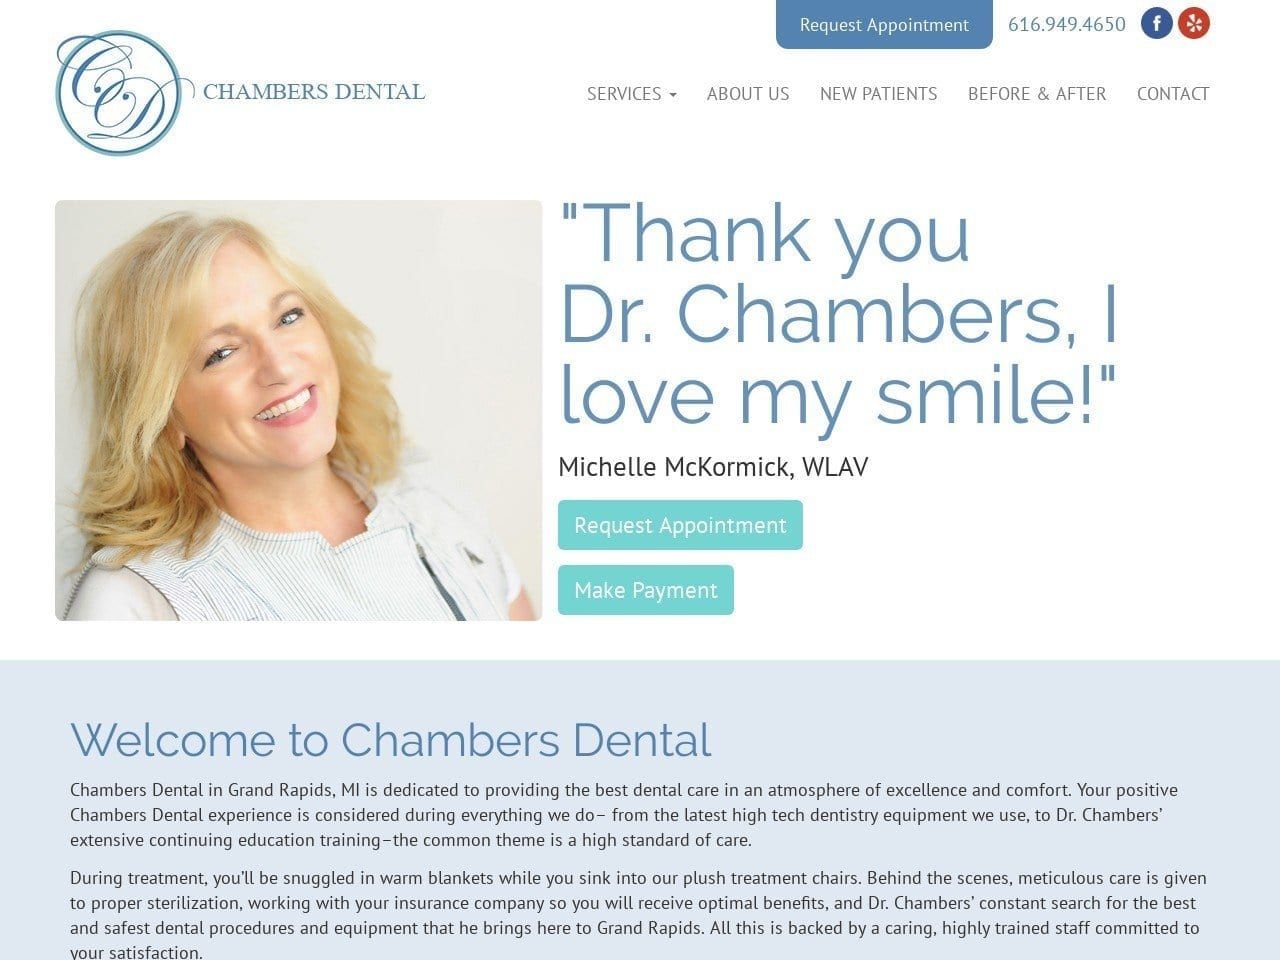 Chambers Dental Website Screenshot from chambersdental.com